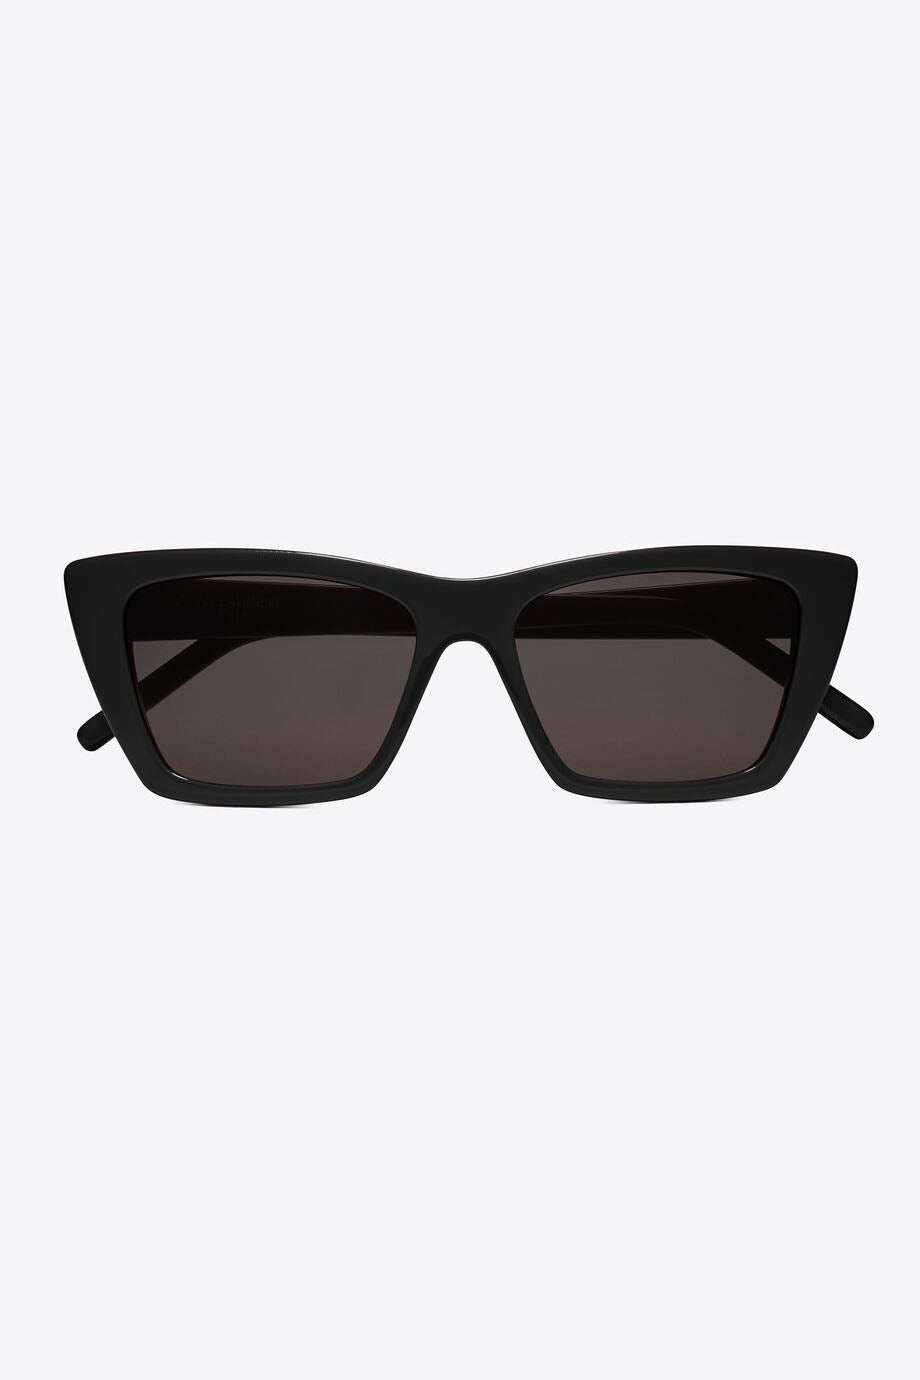 Saint Laurent Sunglasses Black SL 276 MICA 032